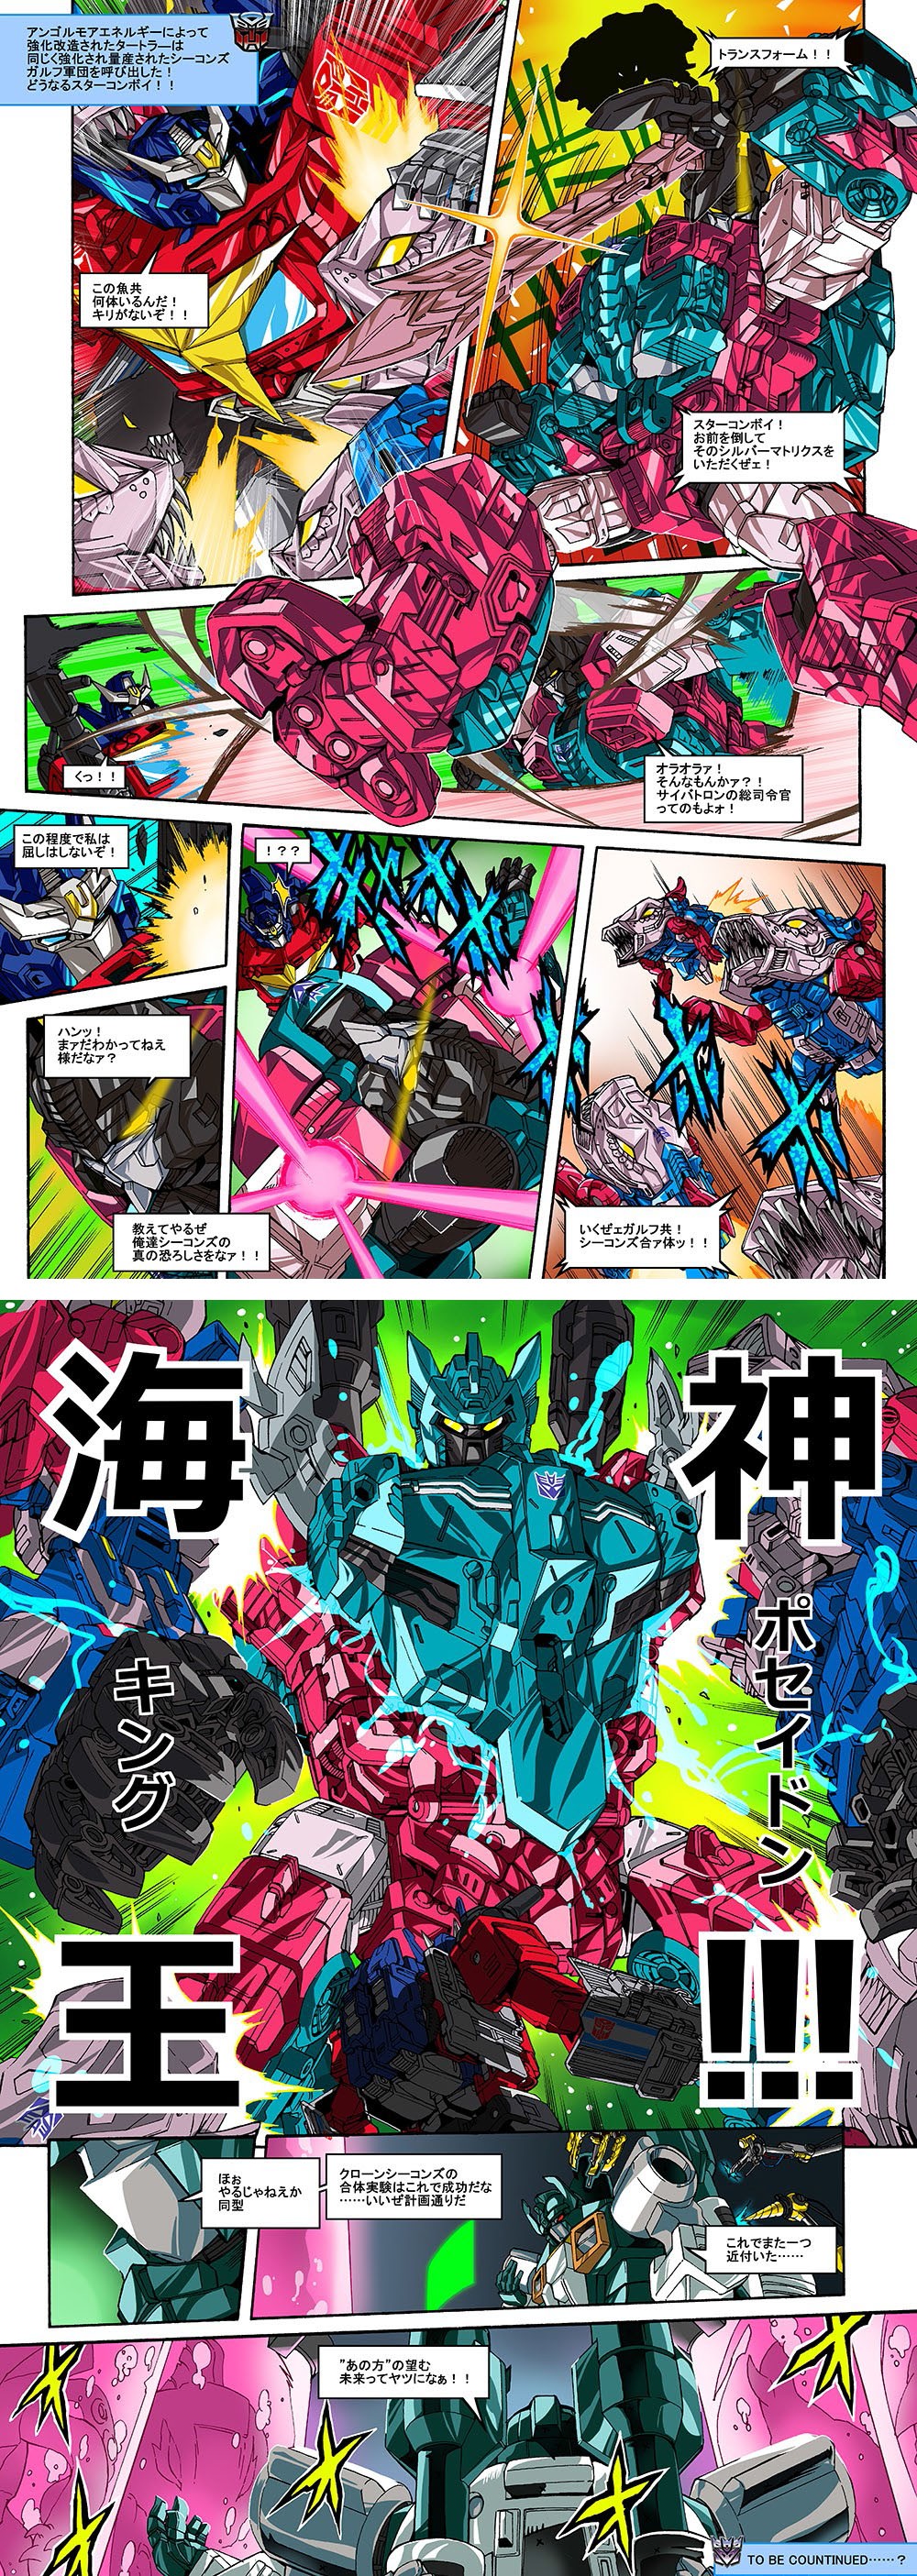 Transformers News: Takara Tomy Posts New Turtler Manga Issues 2 and 3